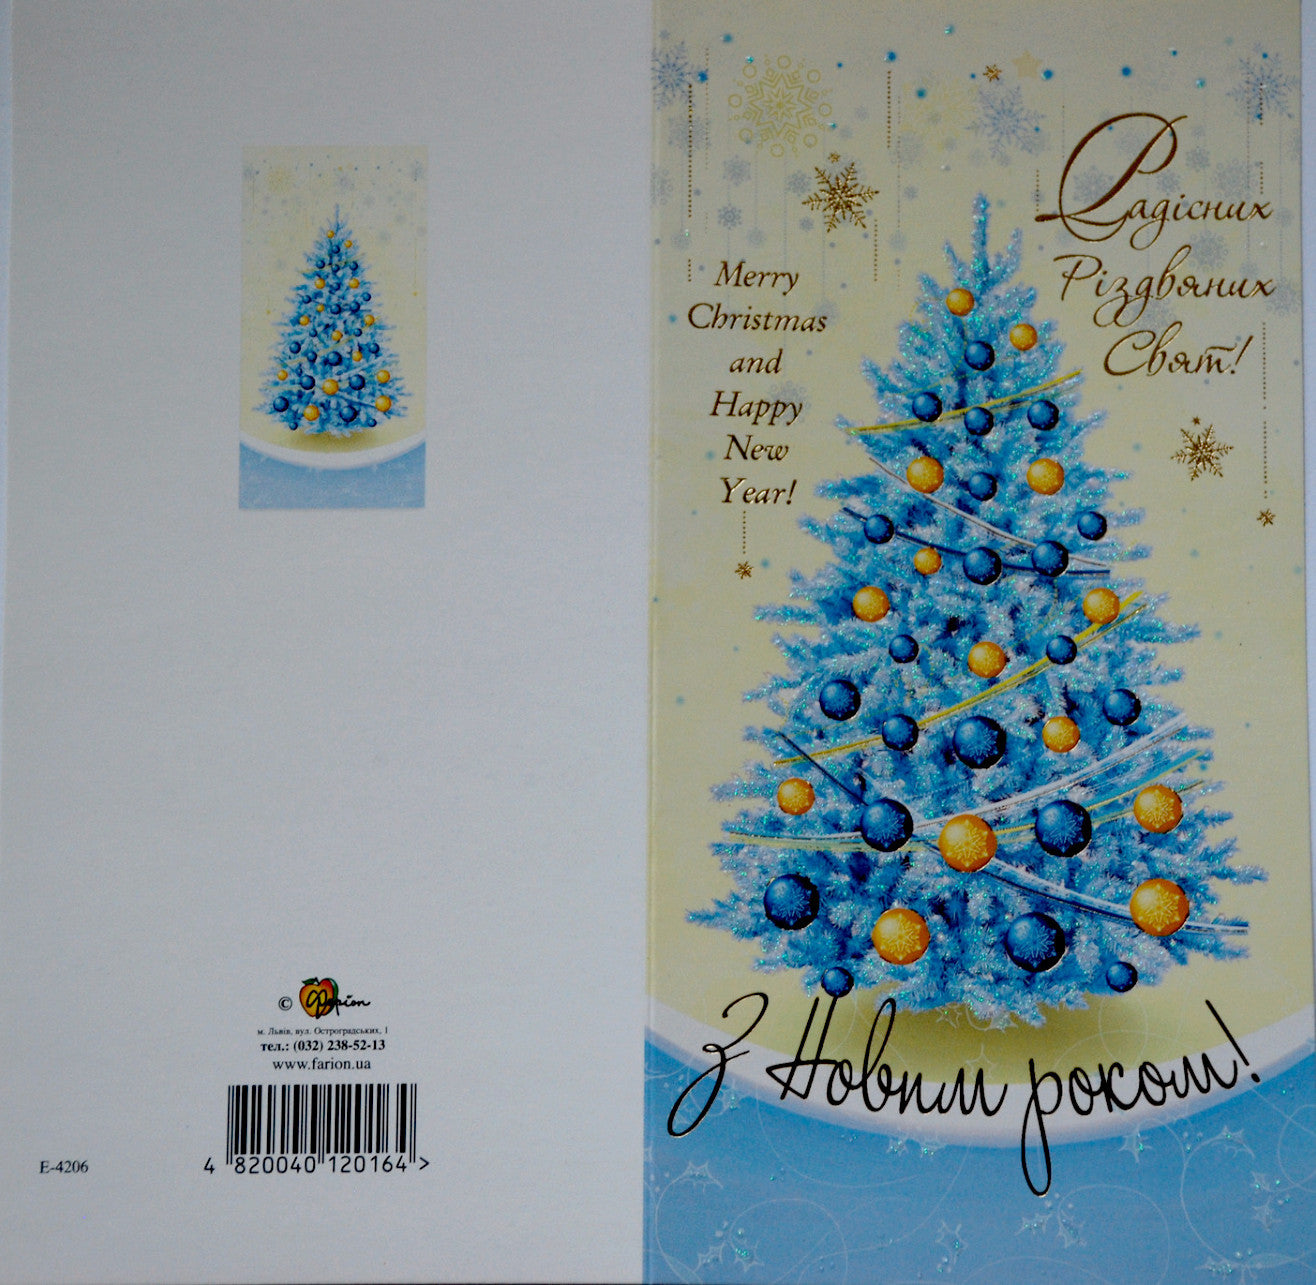 Ukrainian Christmas card. Blue and yellow.